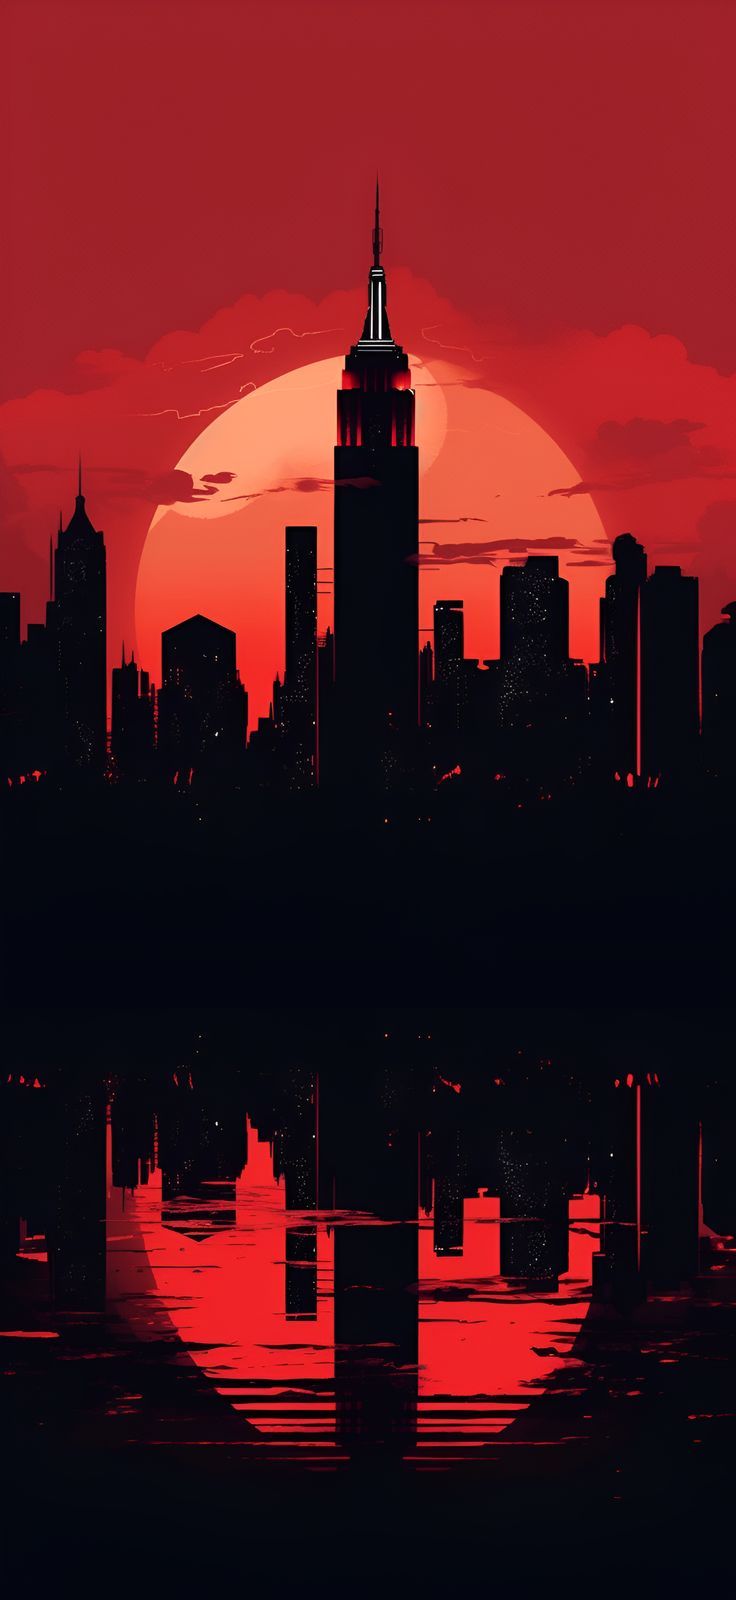 New York City Skyline: Burning Red Aesthetic Wallpaper iPhone. City wallpaper, City skyline wallpaper, City illustration